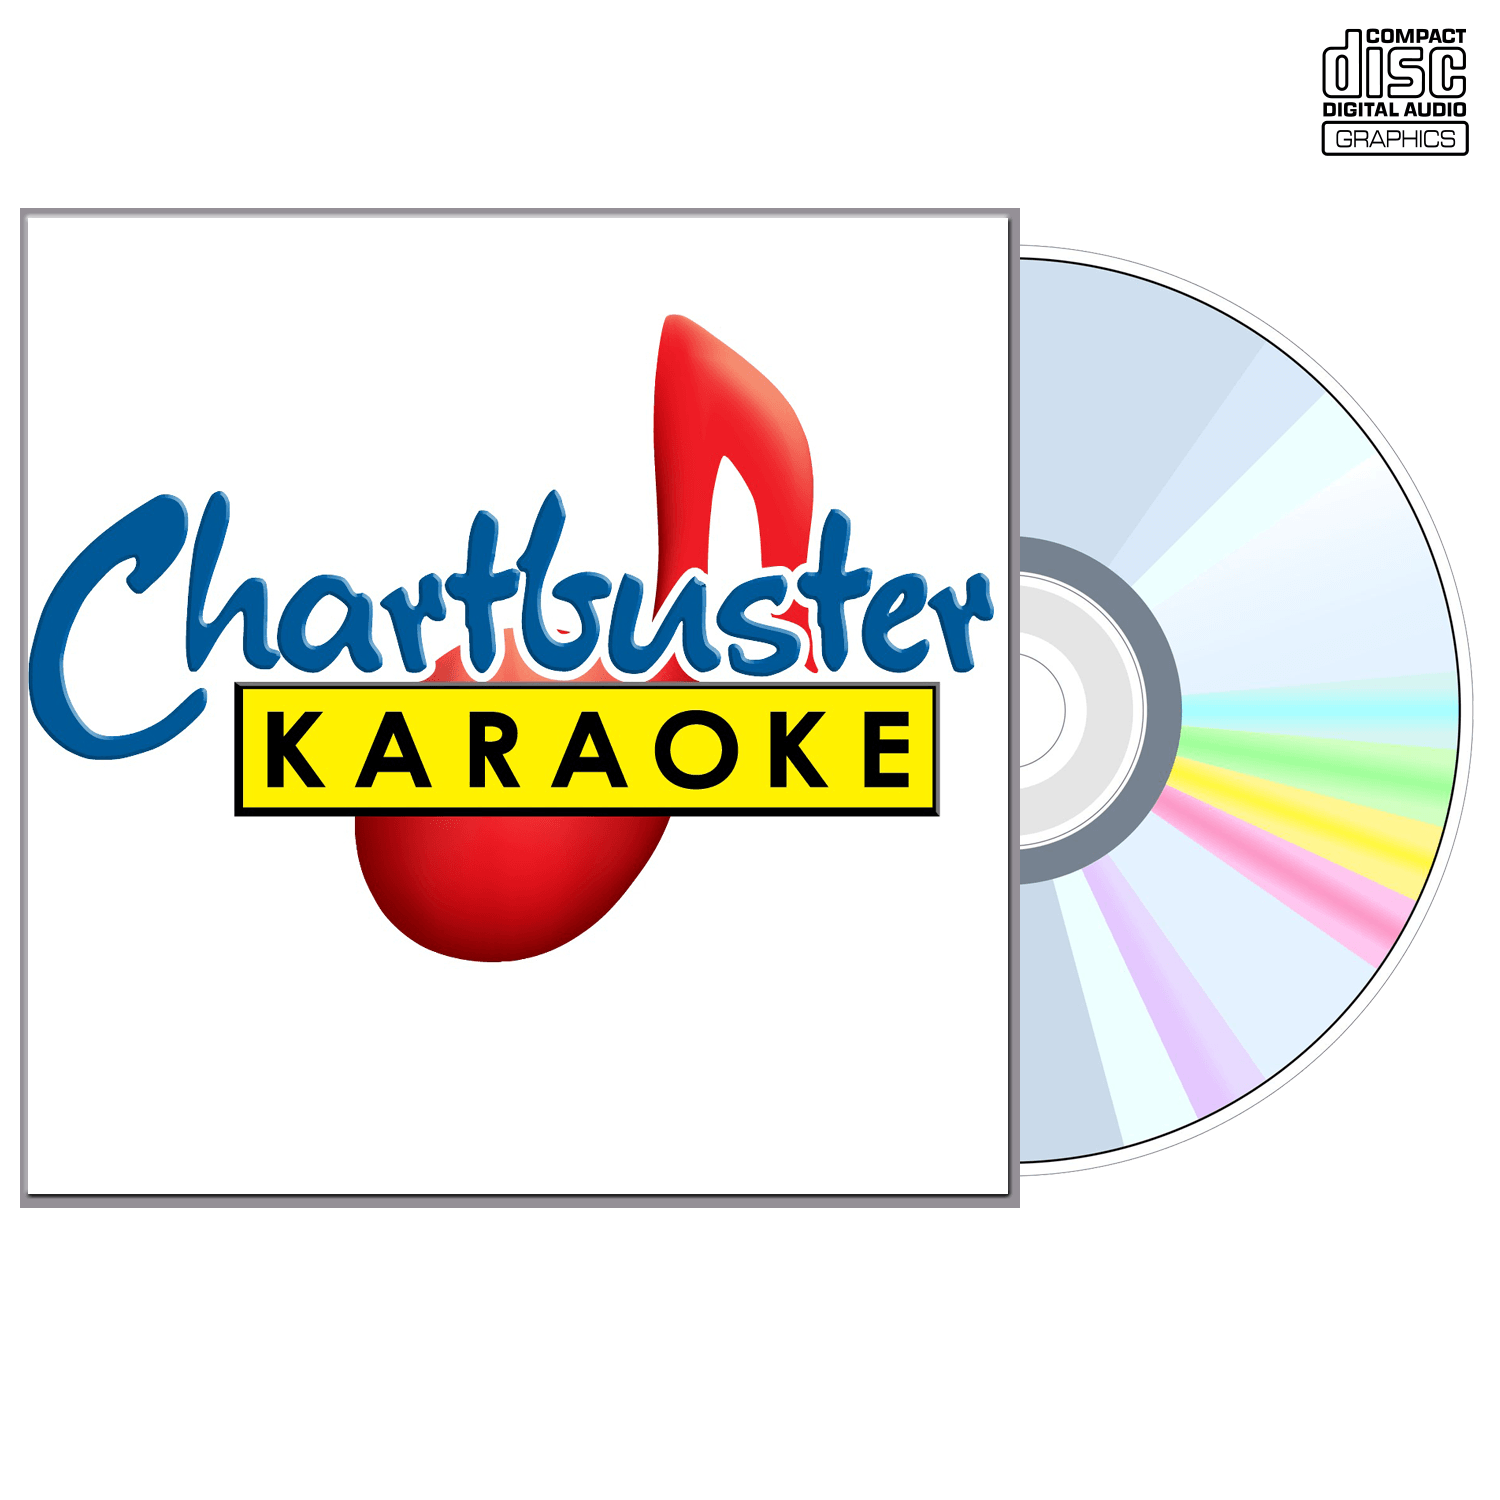 Sounds Of Sixties Vol 12 - CD+G - Chartbuster Karaoke - Karaoke Home Entertainment